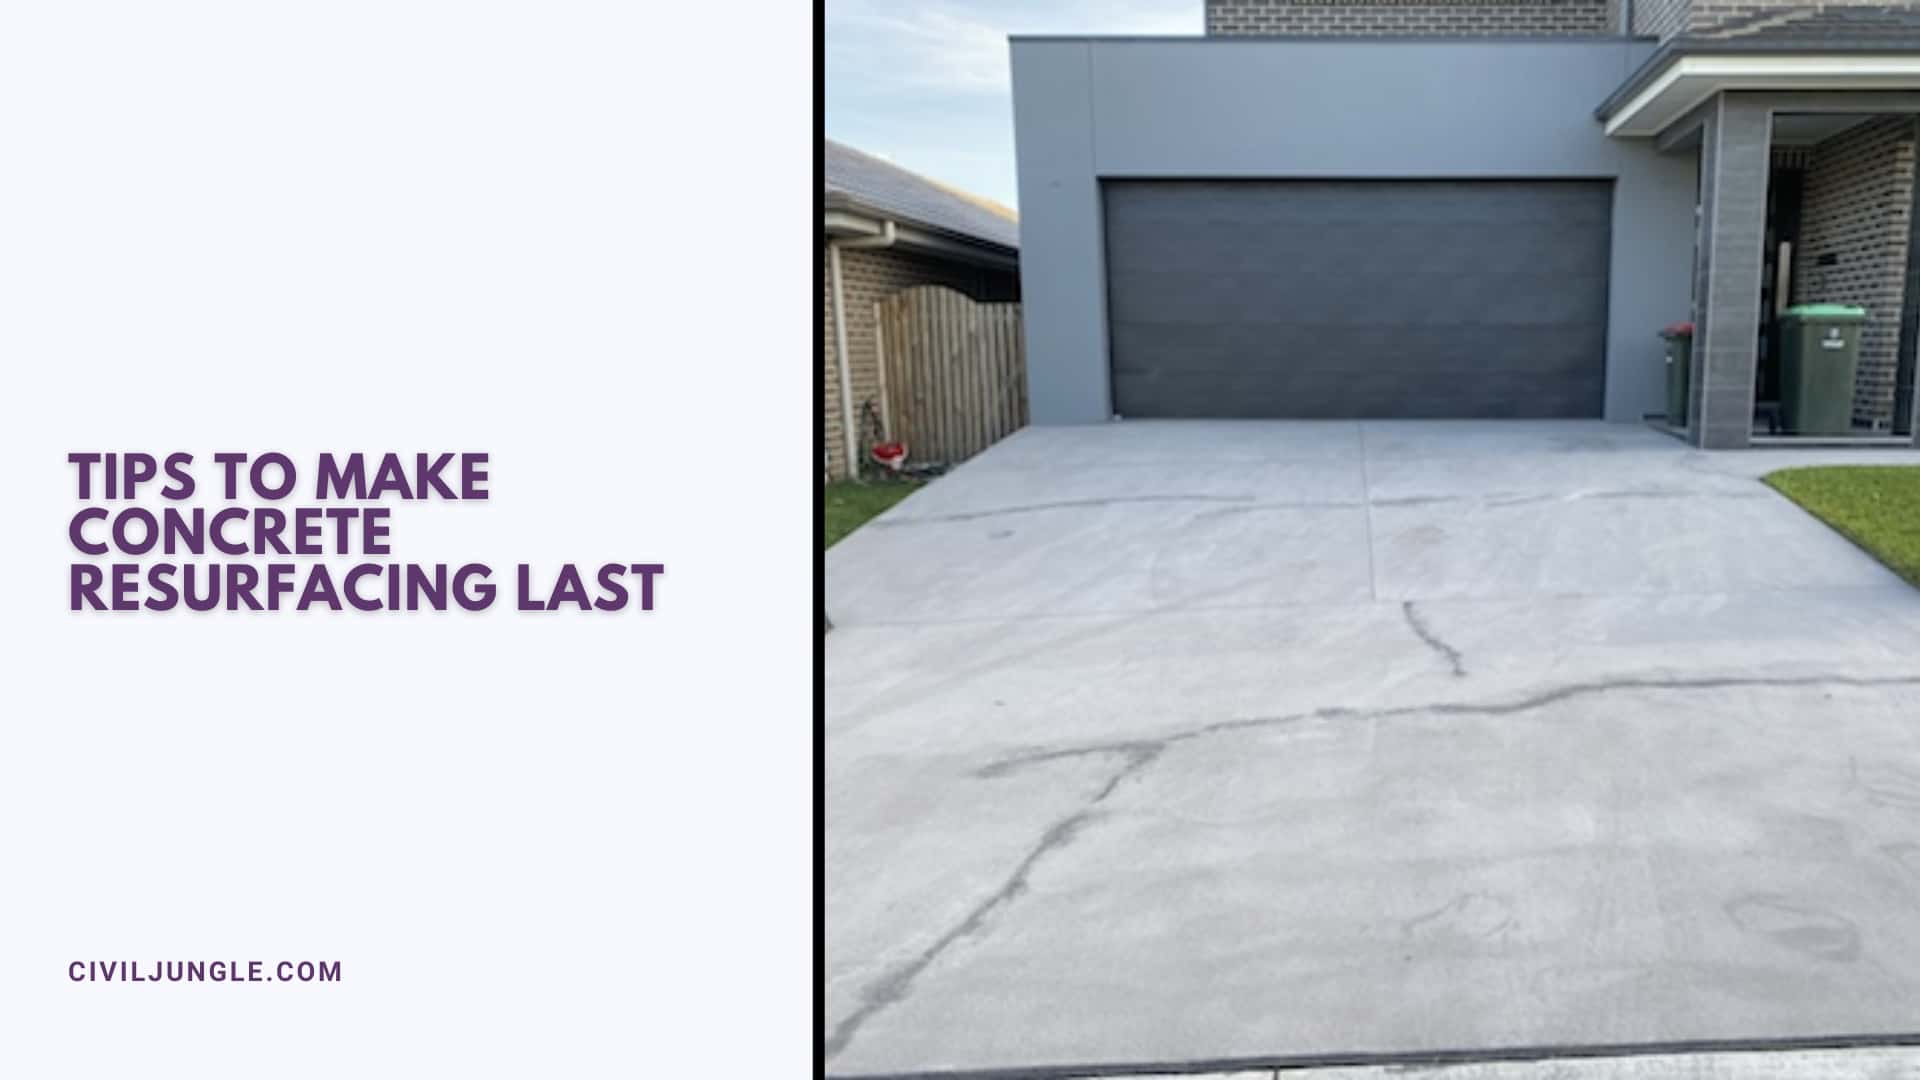 Tips to Make Concrete Resurfacing Last